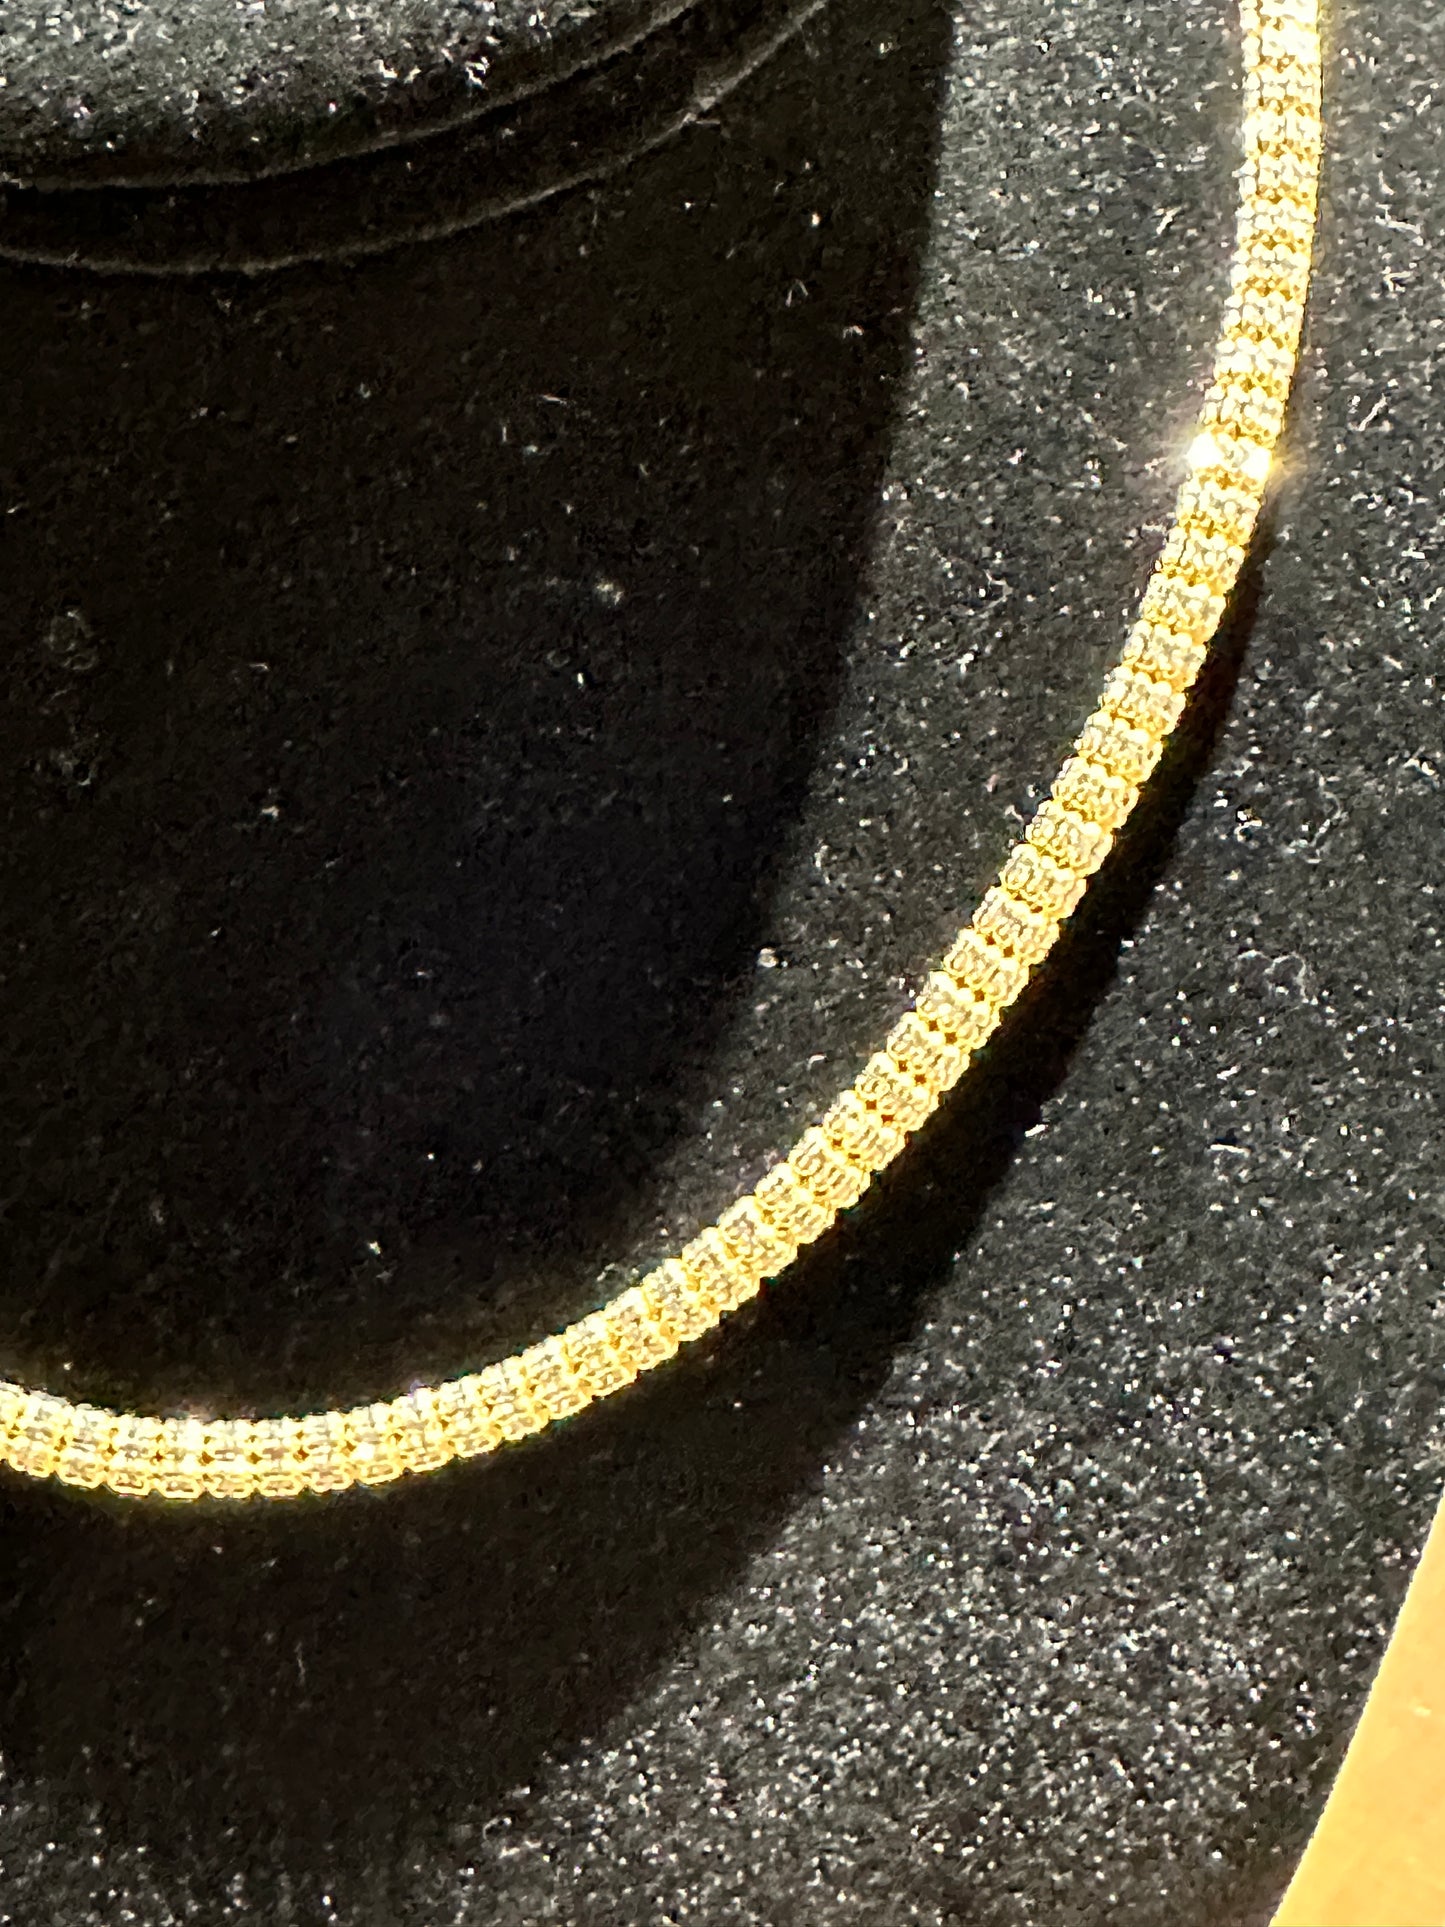 10kt Yellow Gold Rhodium Cut “Diamond Cut” Popcorn Link Chain “bling Chain” 24”